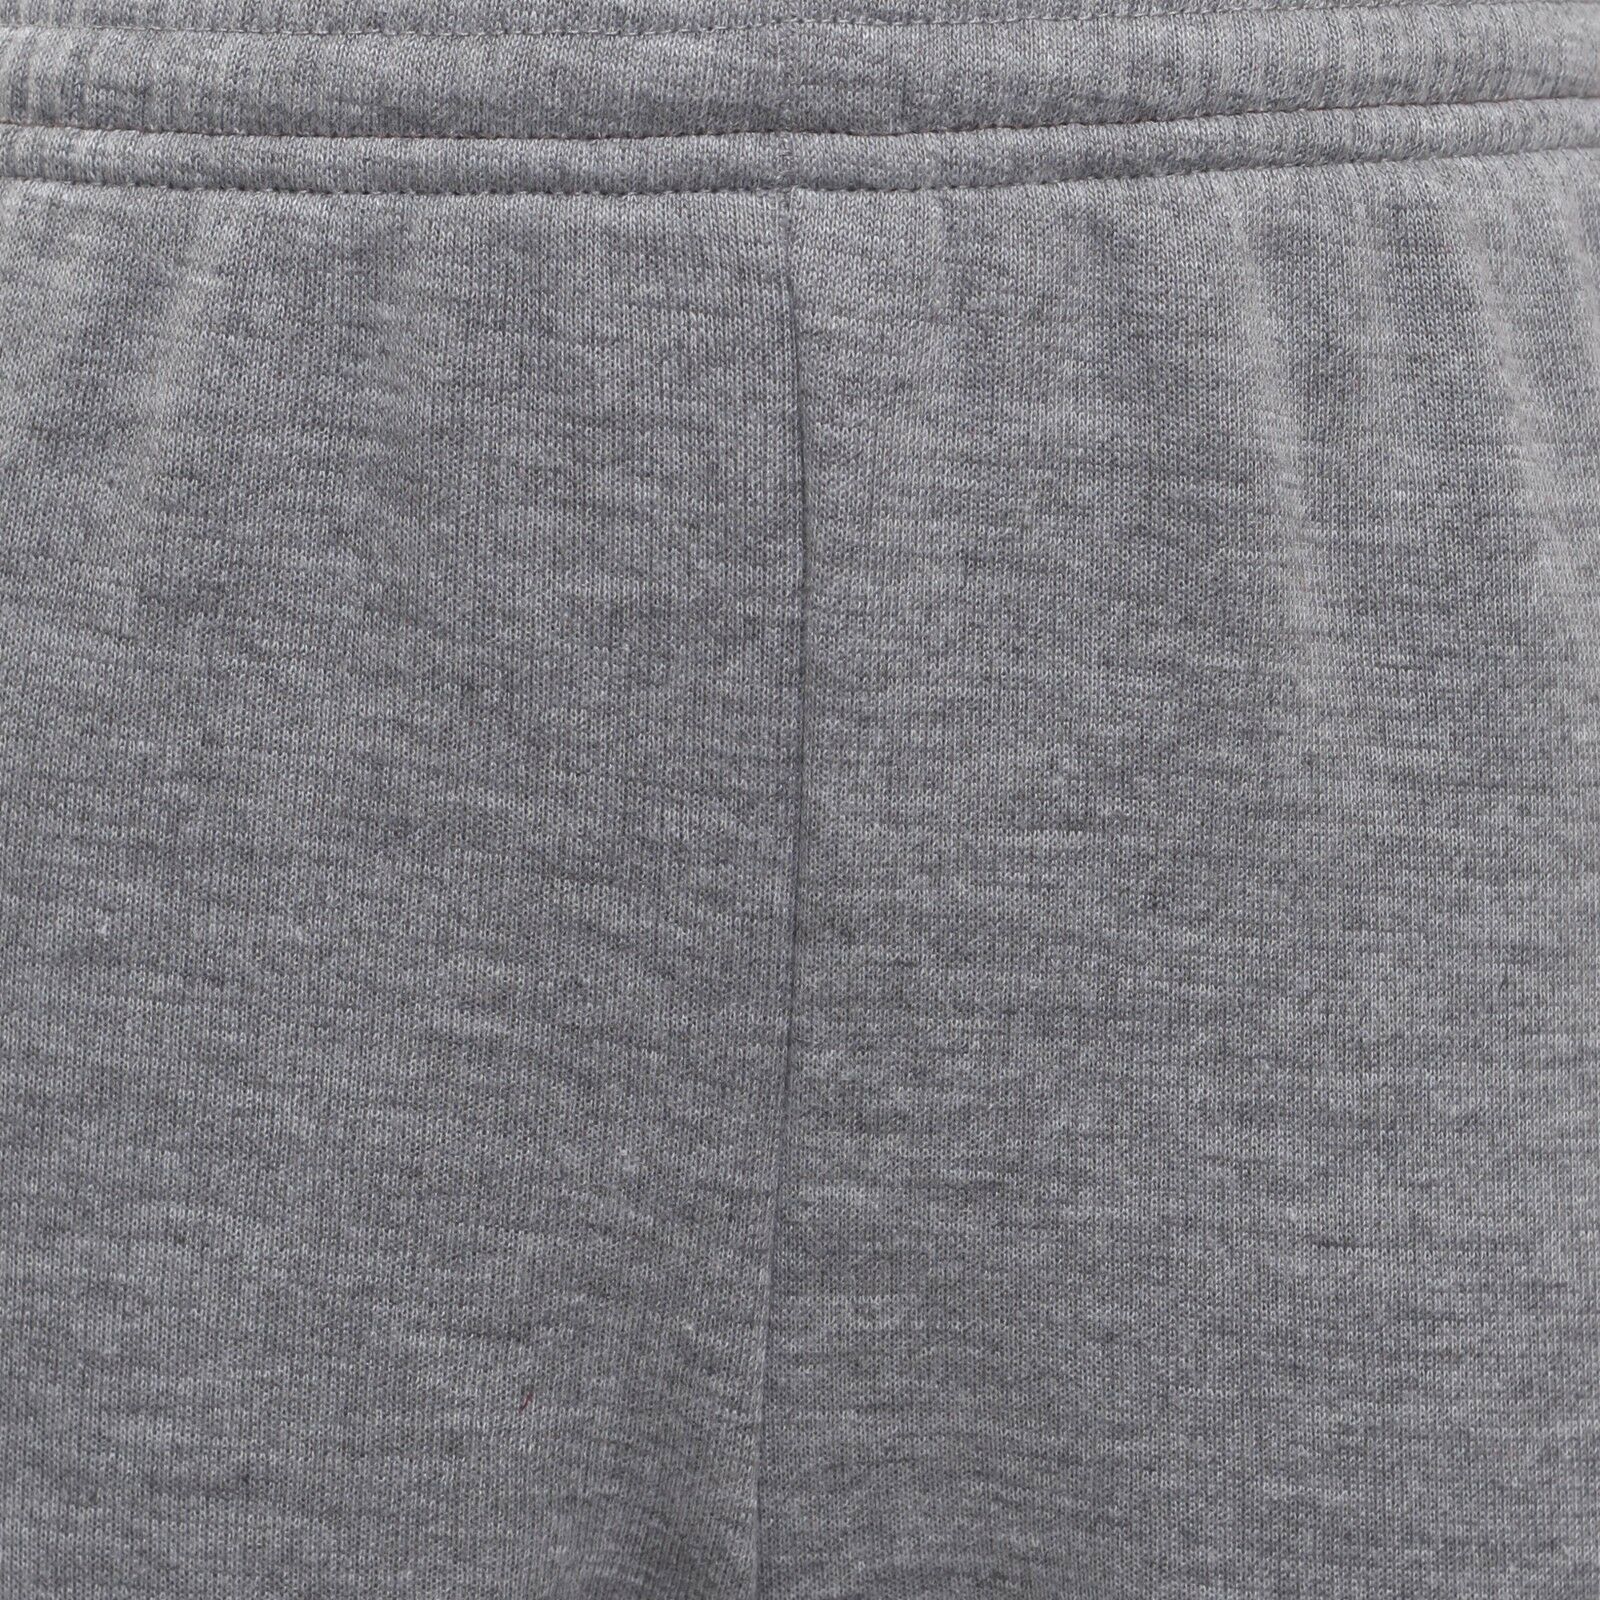 Fleece PE Gym School Jogging Bottoms Trousers Joggers Pants Unisex Boys Girls  -Grey